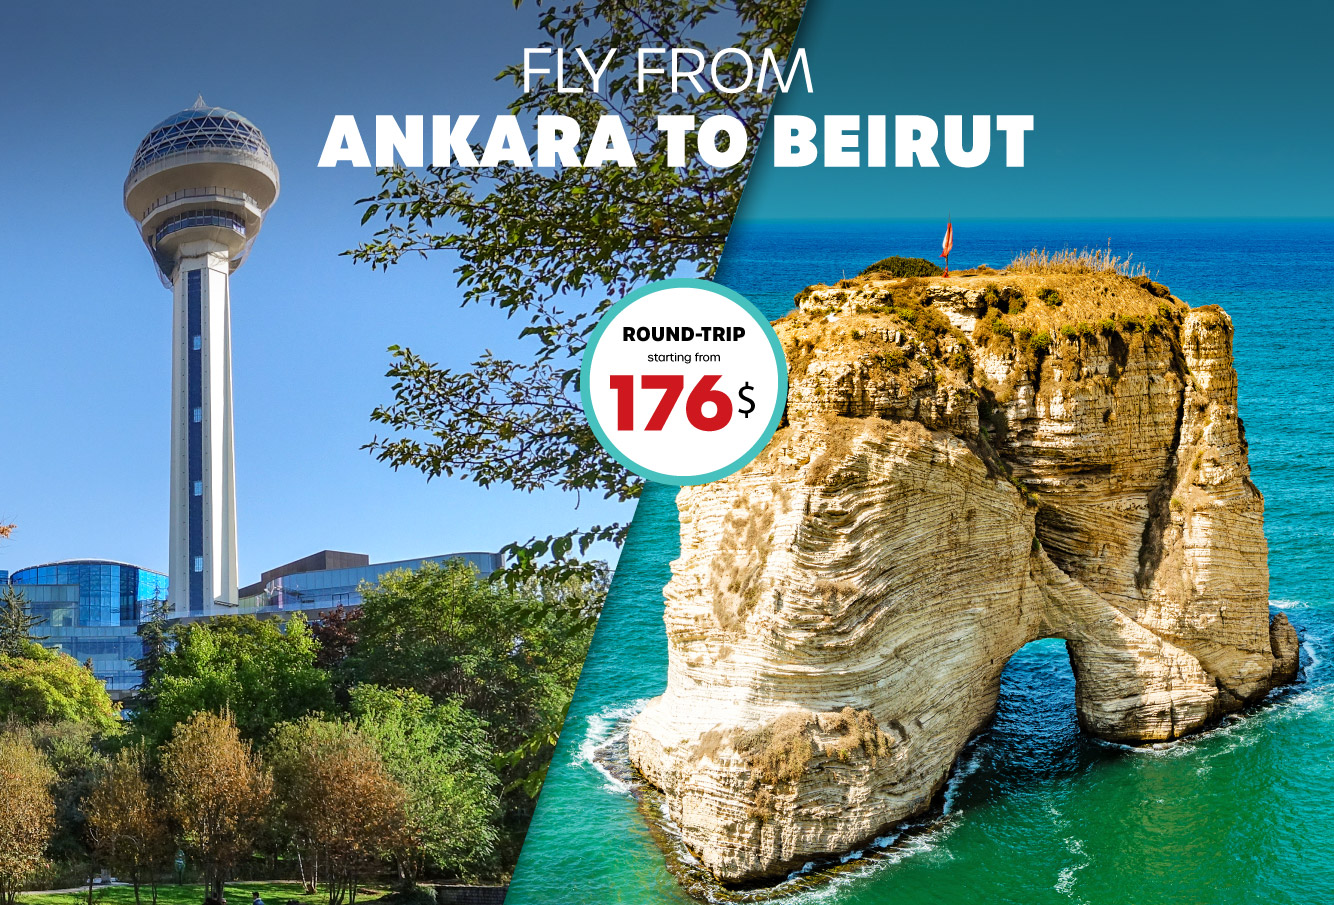 Ankara-Beirut flights to be relaunched! 